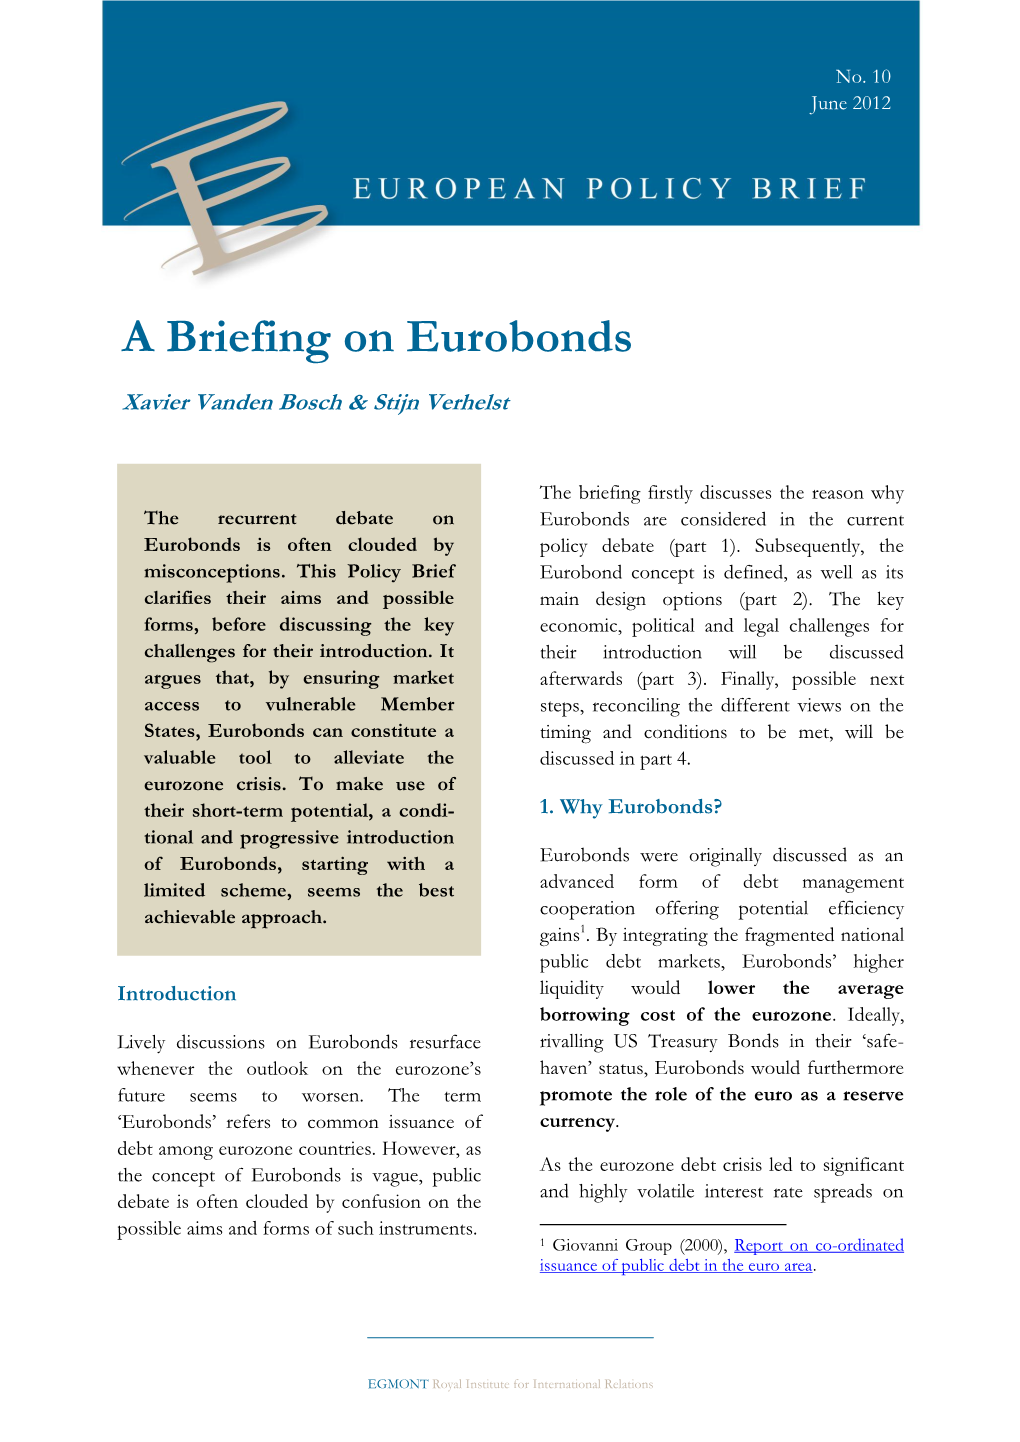 A Briefing on Eurobonds